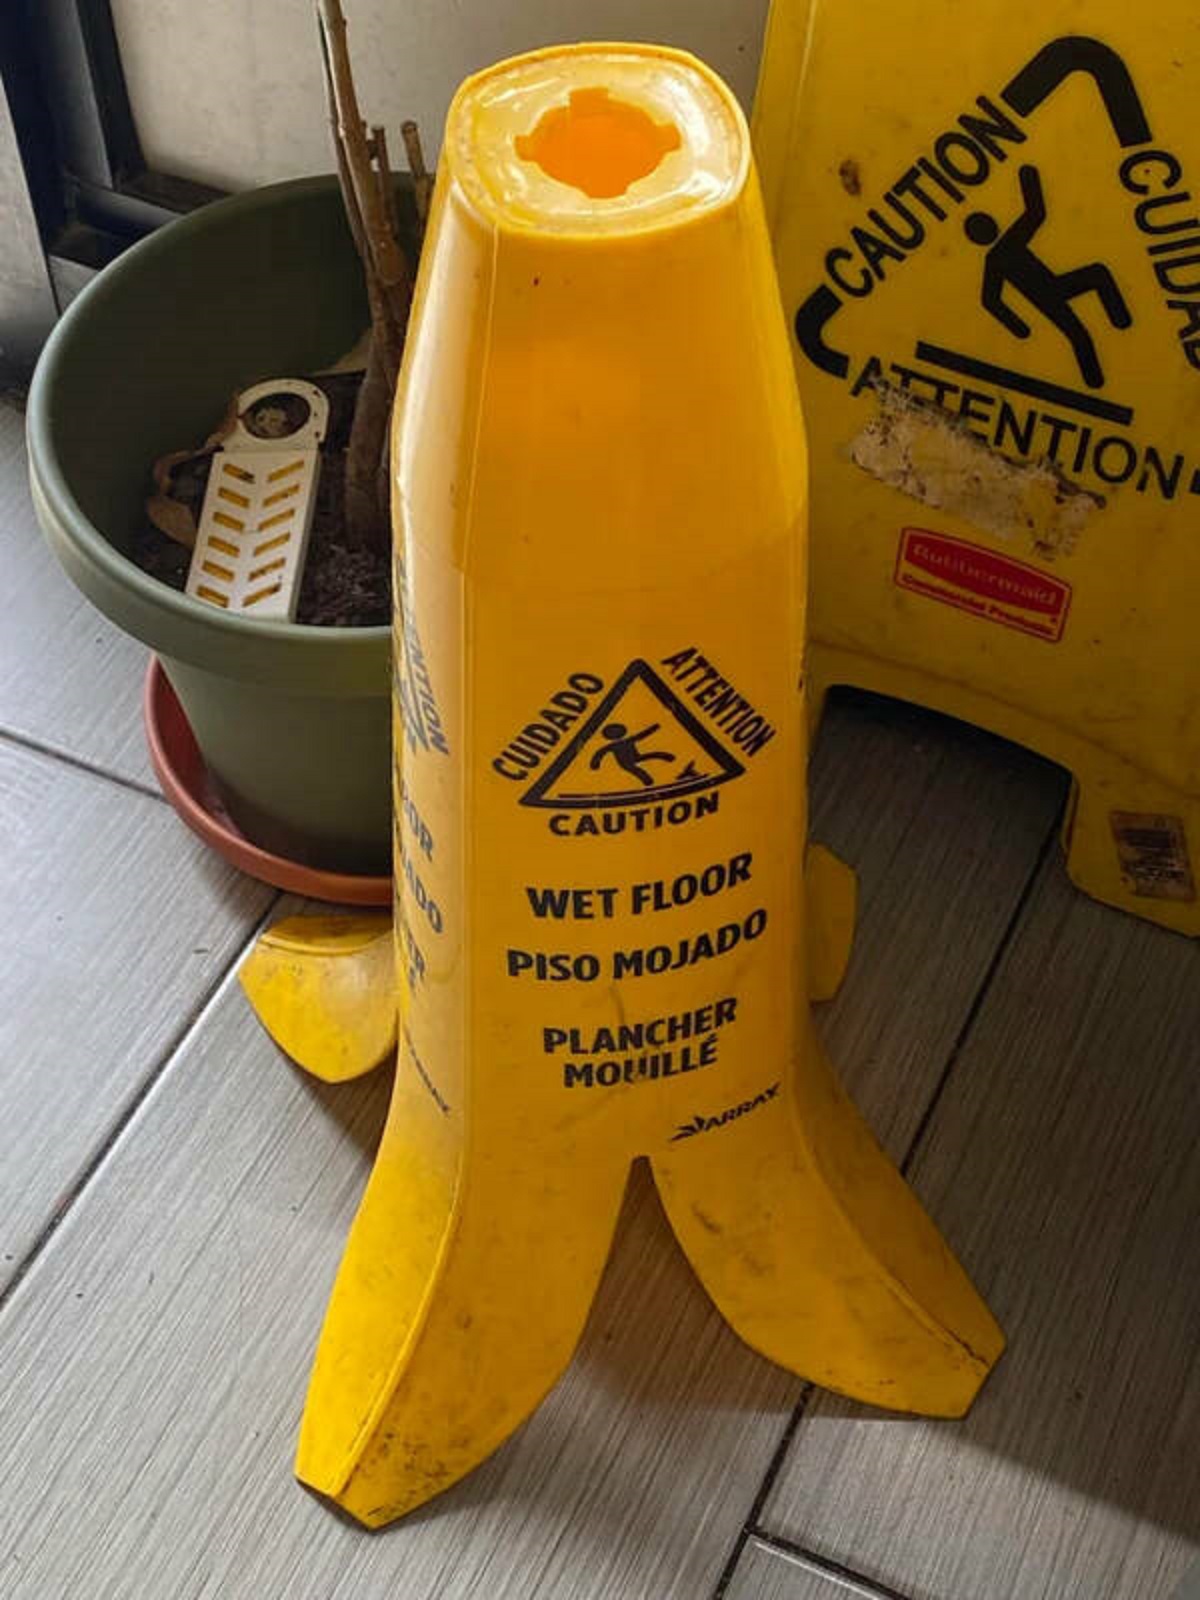 "This slippery floor sign shaped like a banana peel."